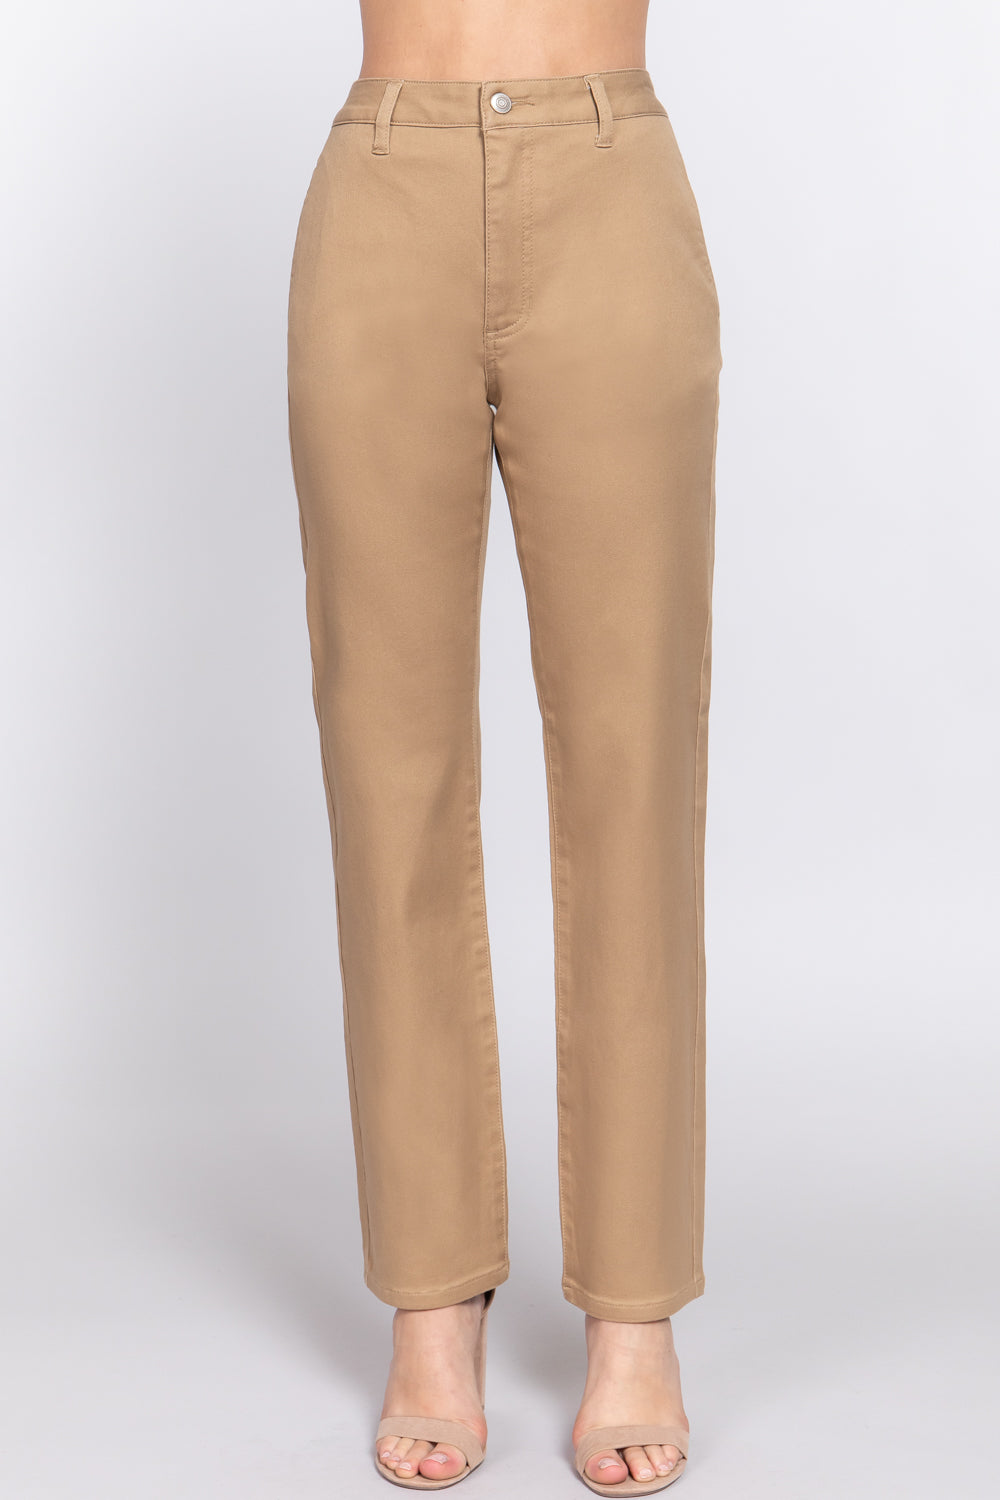 Khaki - Straight Fit Twill Long Pants - 5 colors - womens pants at TFC&H Co.